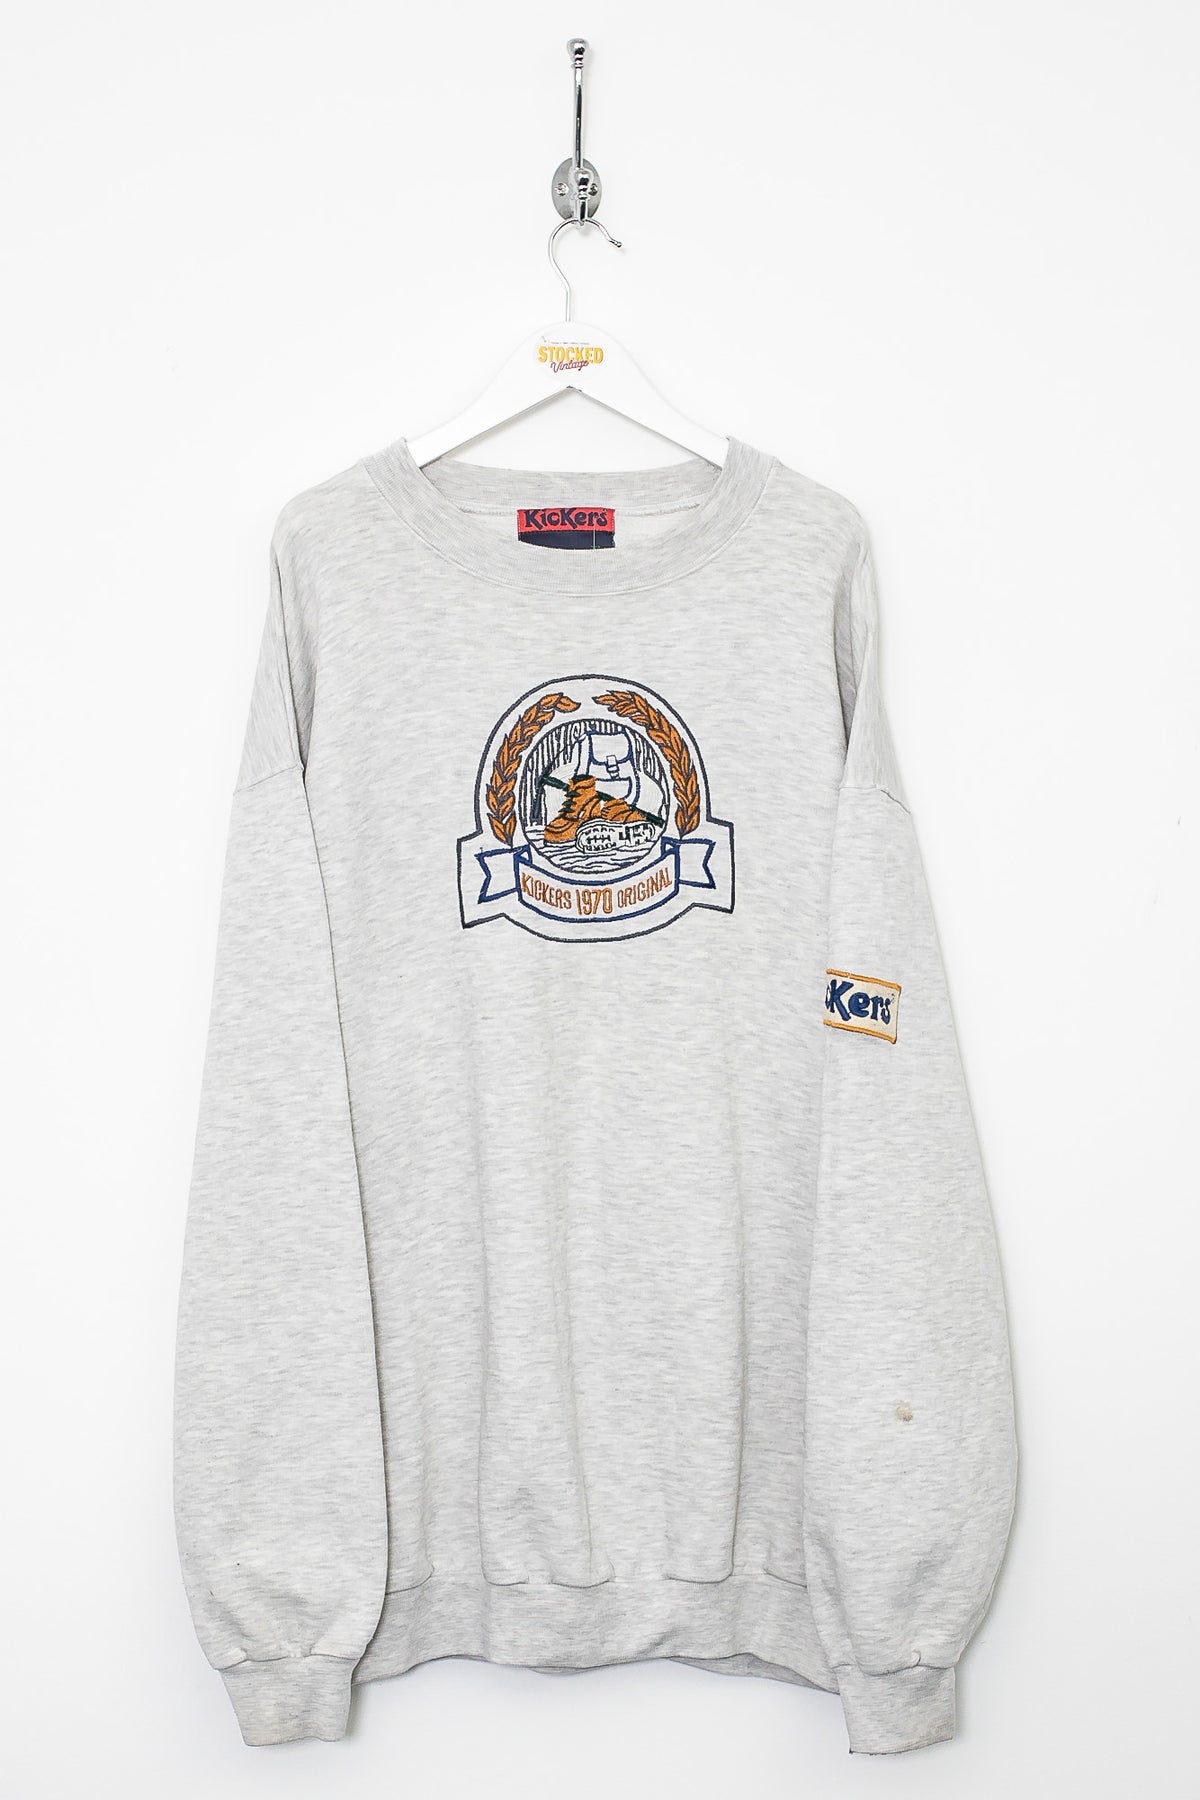 00s Kickers Sweatshirt (XL)